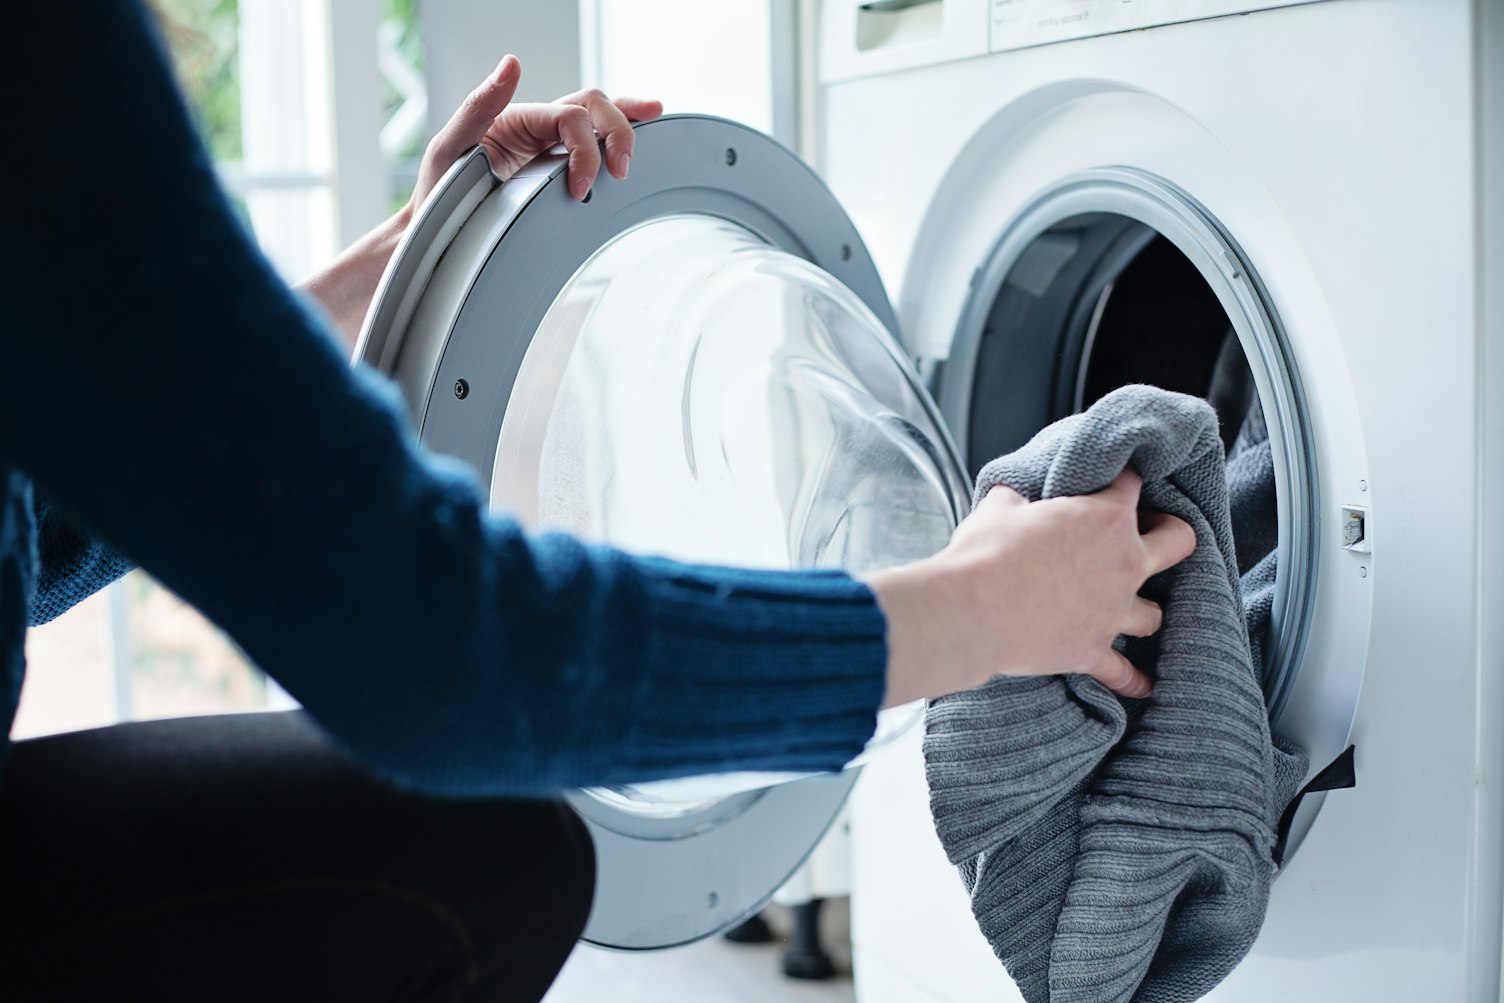 Woman Loading Dirty Laundry in Washing Machine